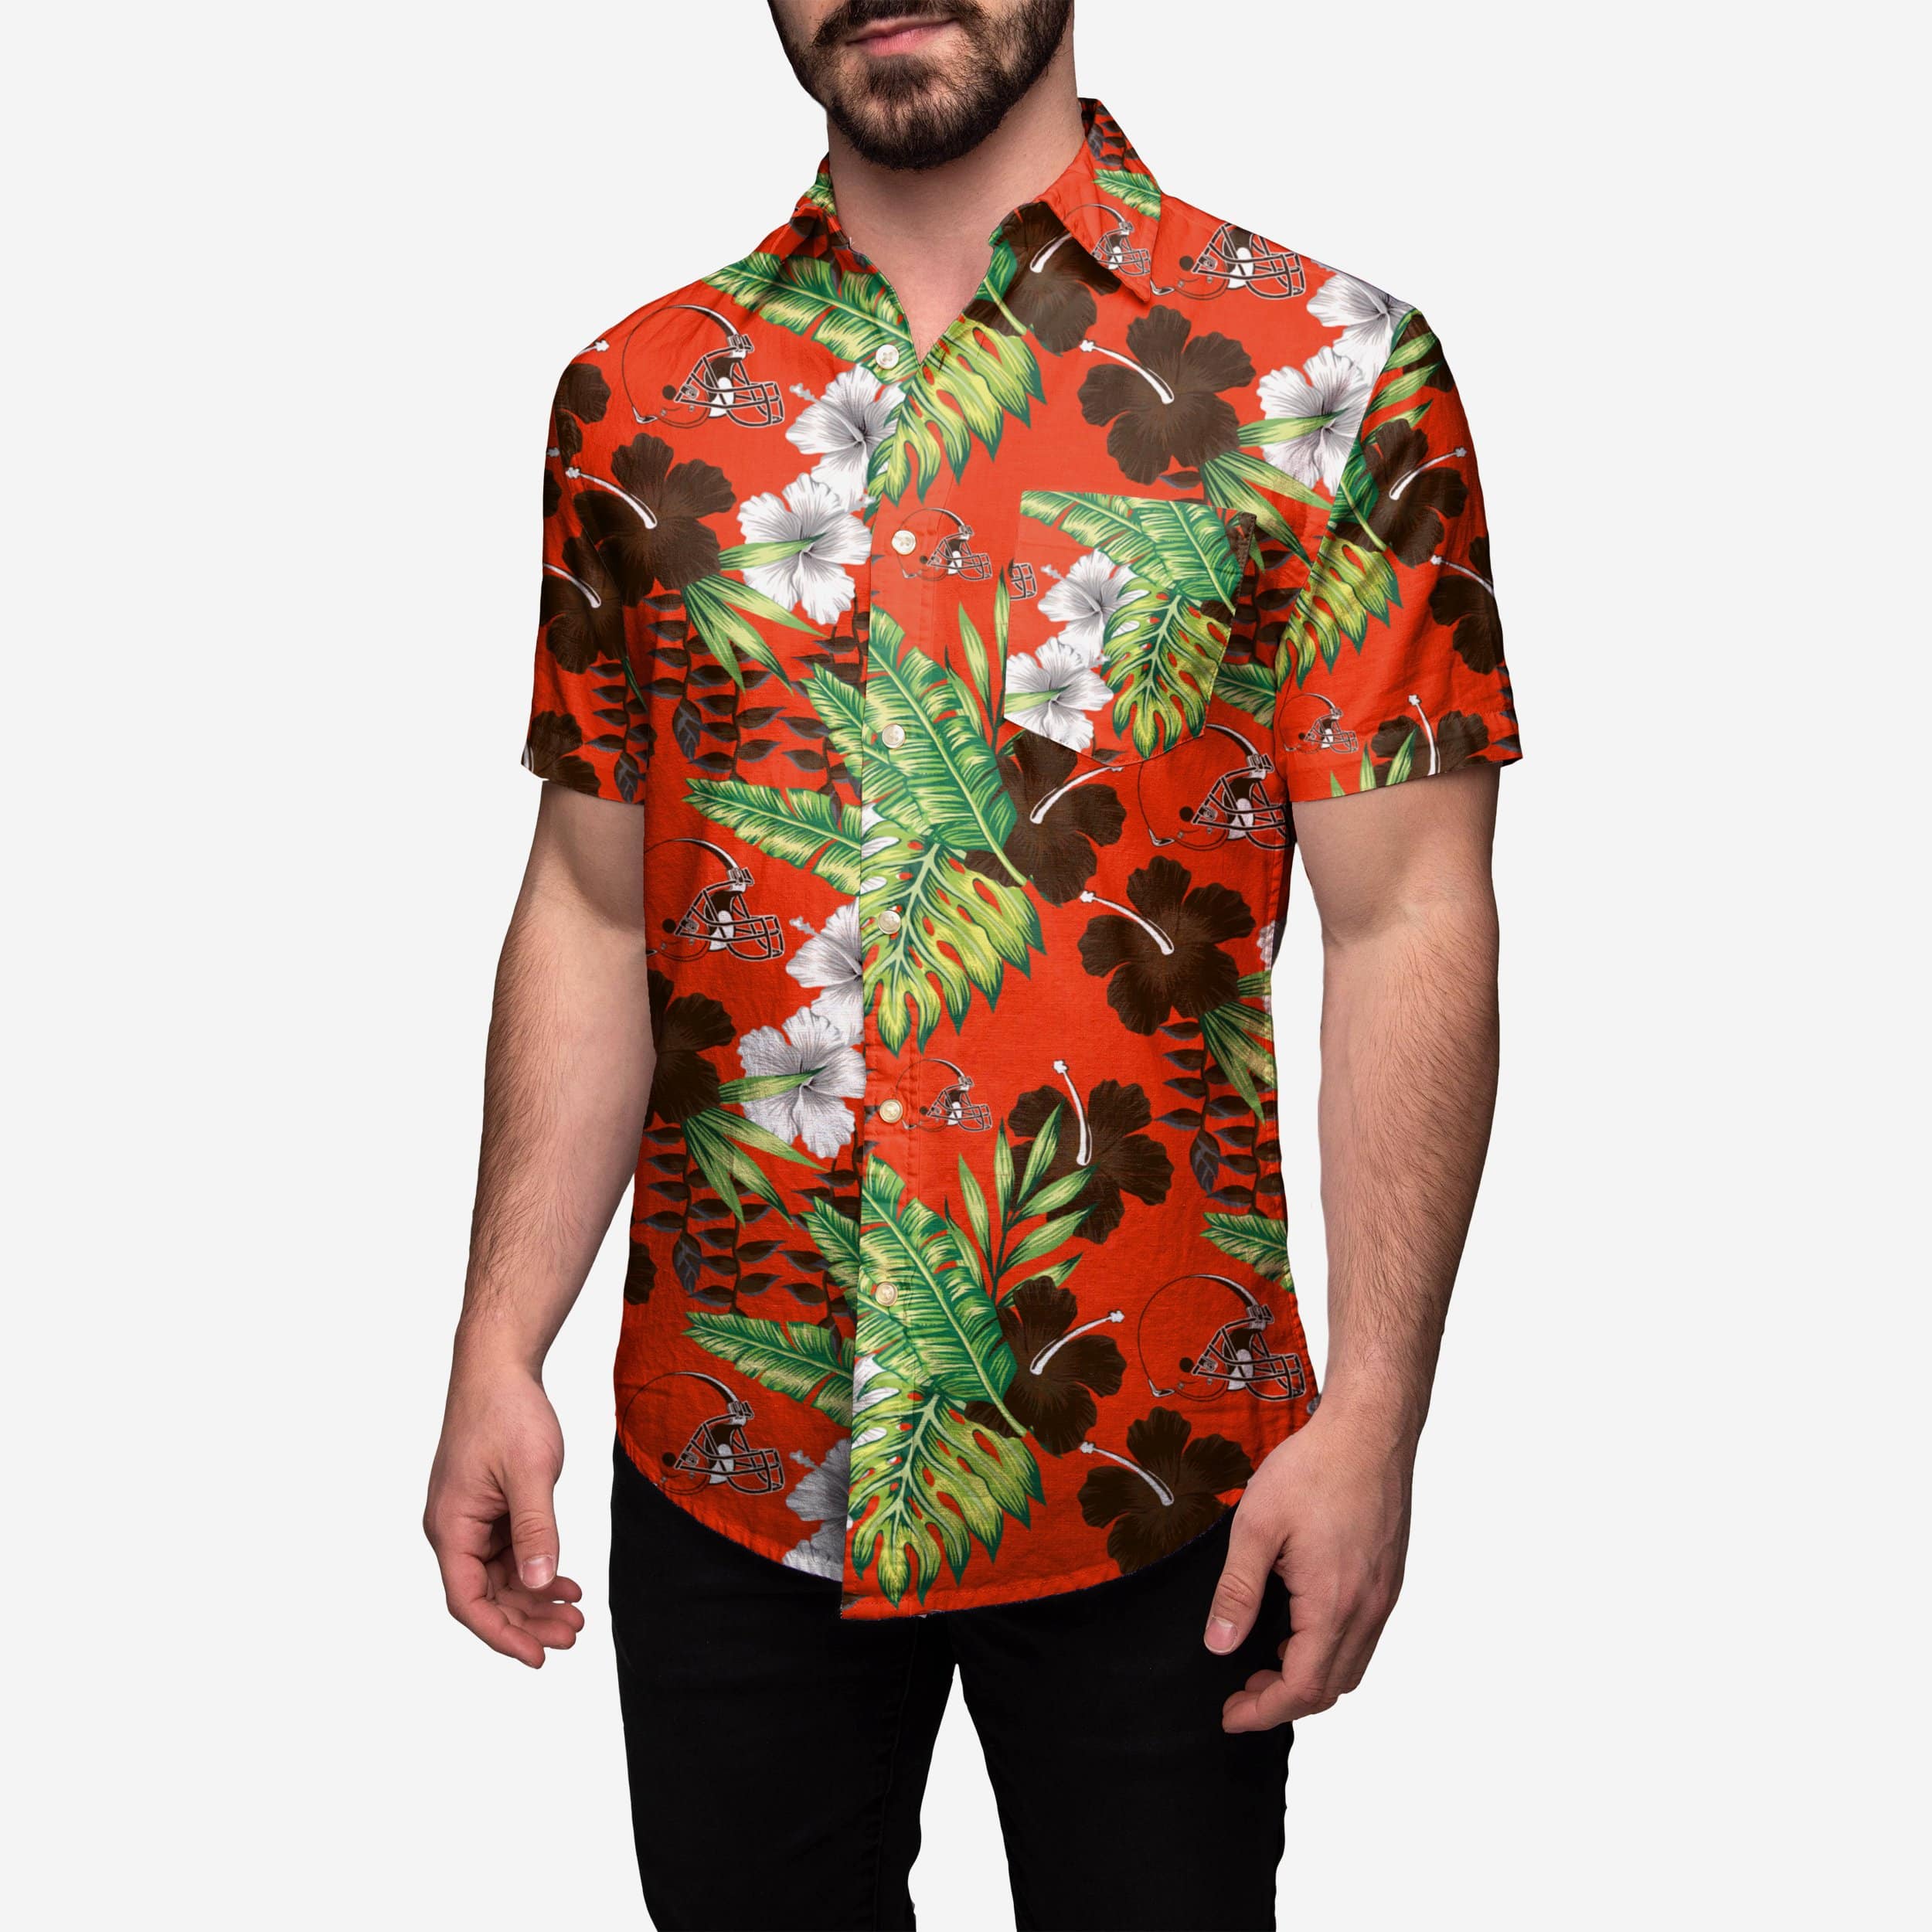 spids agitation Psykologisk Cleveland Browns Floral Button Up Shirt FOCO